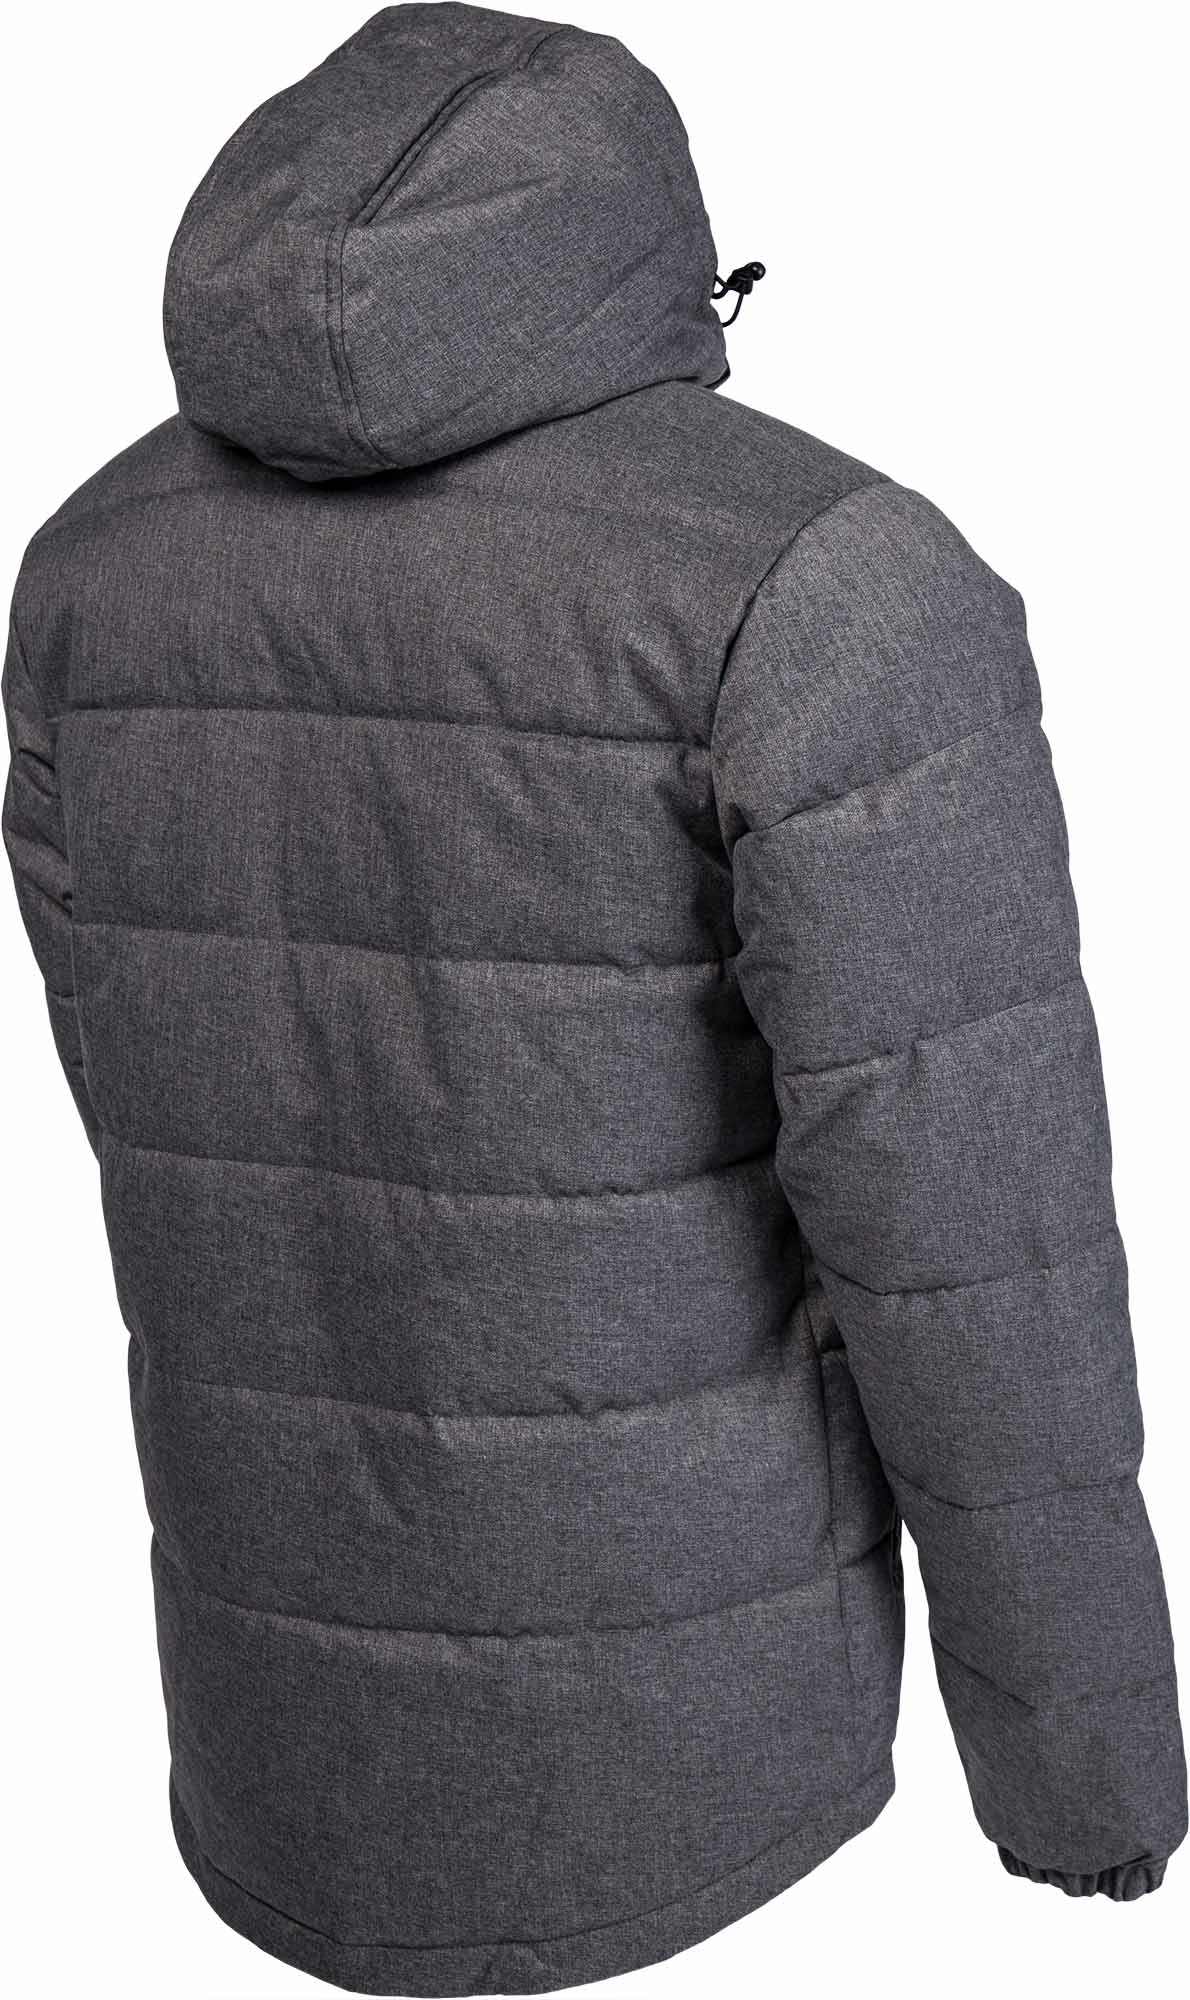 Men’s quilted jacket